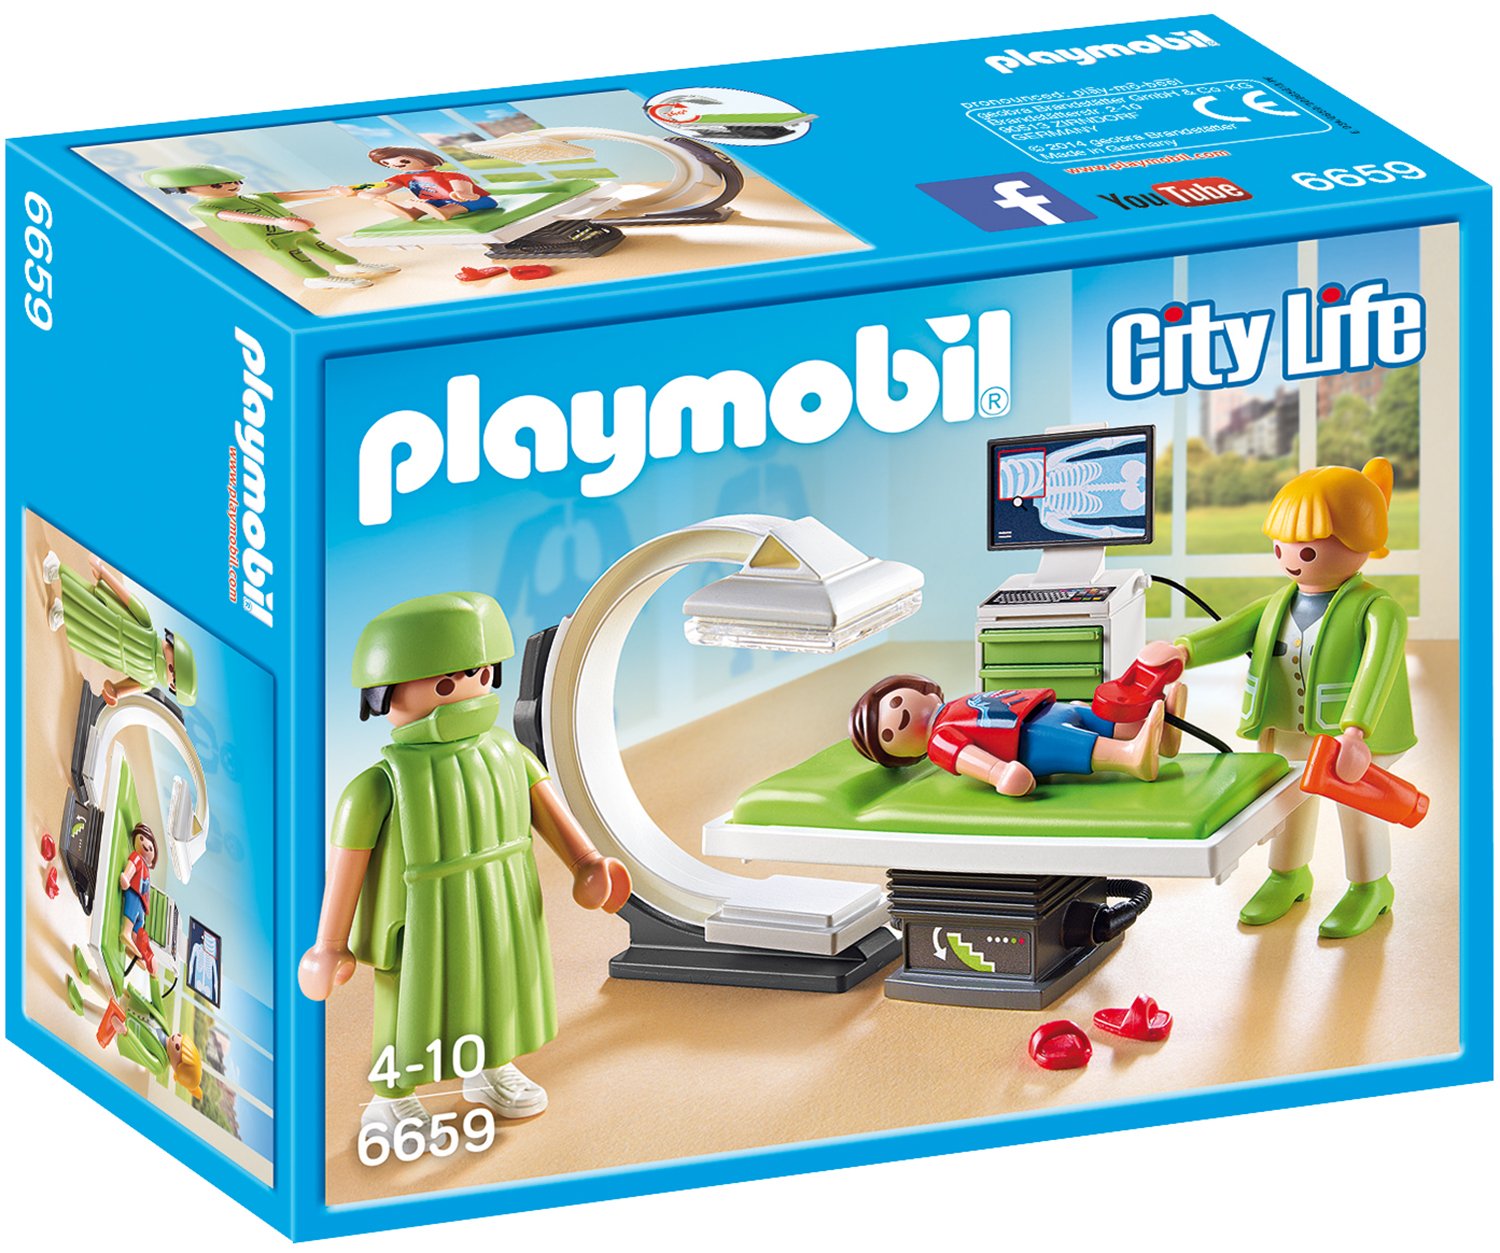 Playmobil X Ray Room